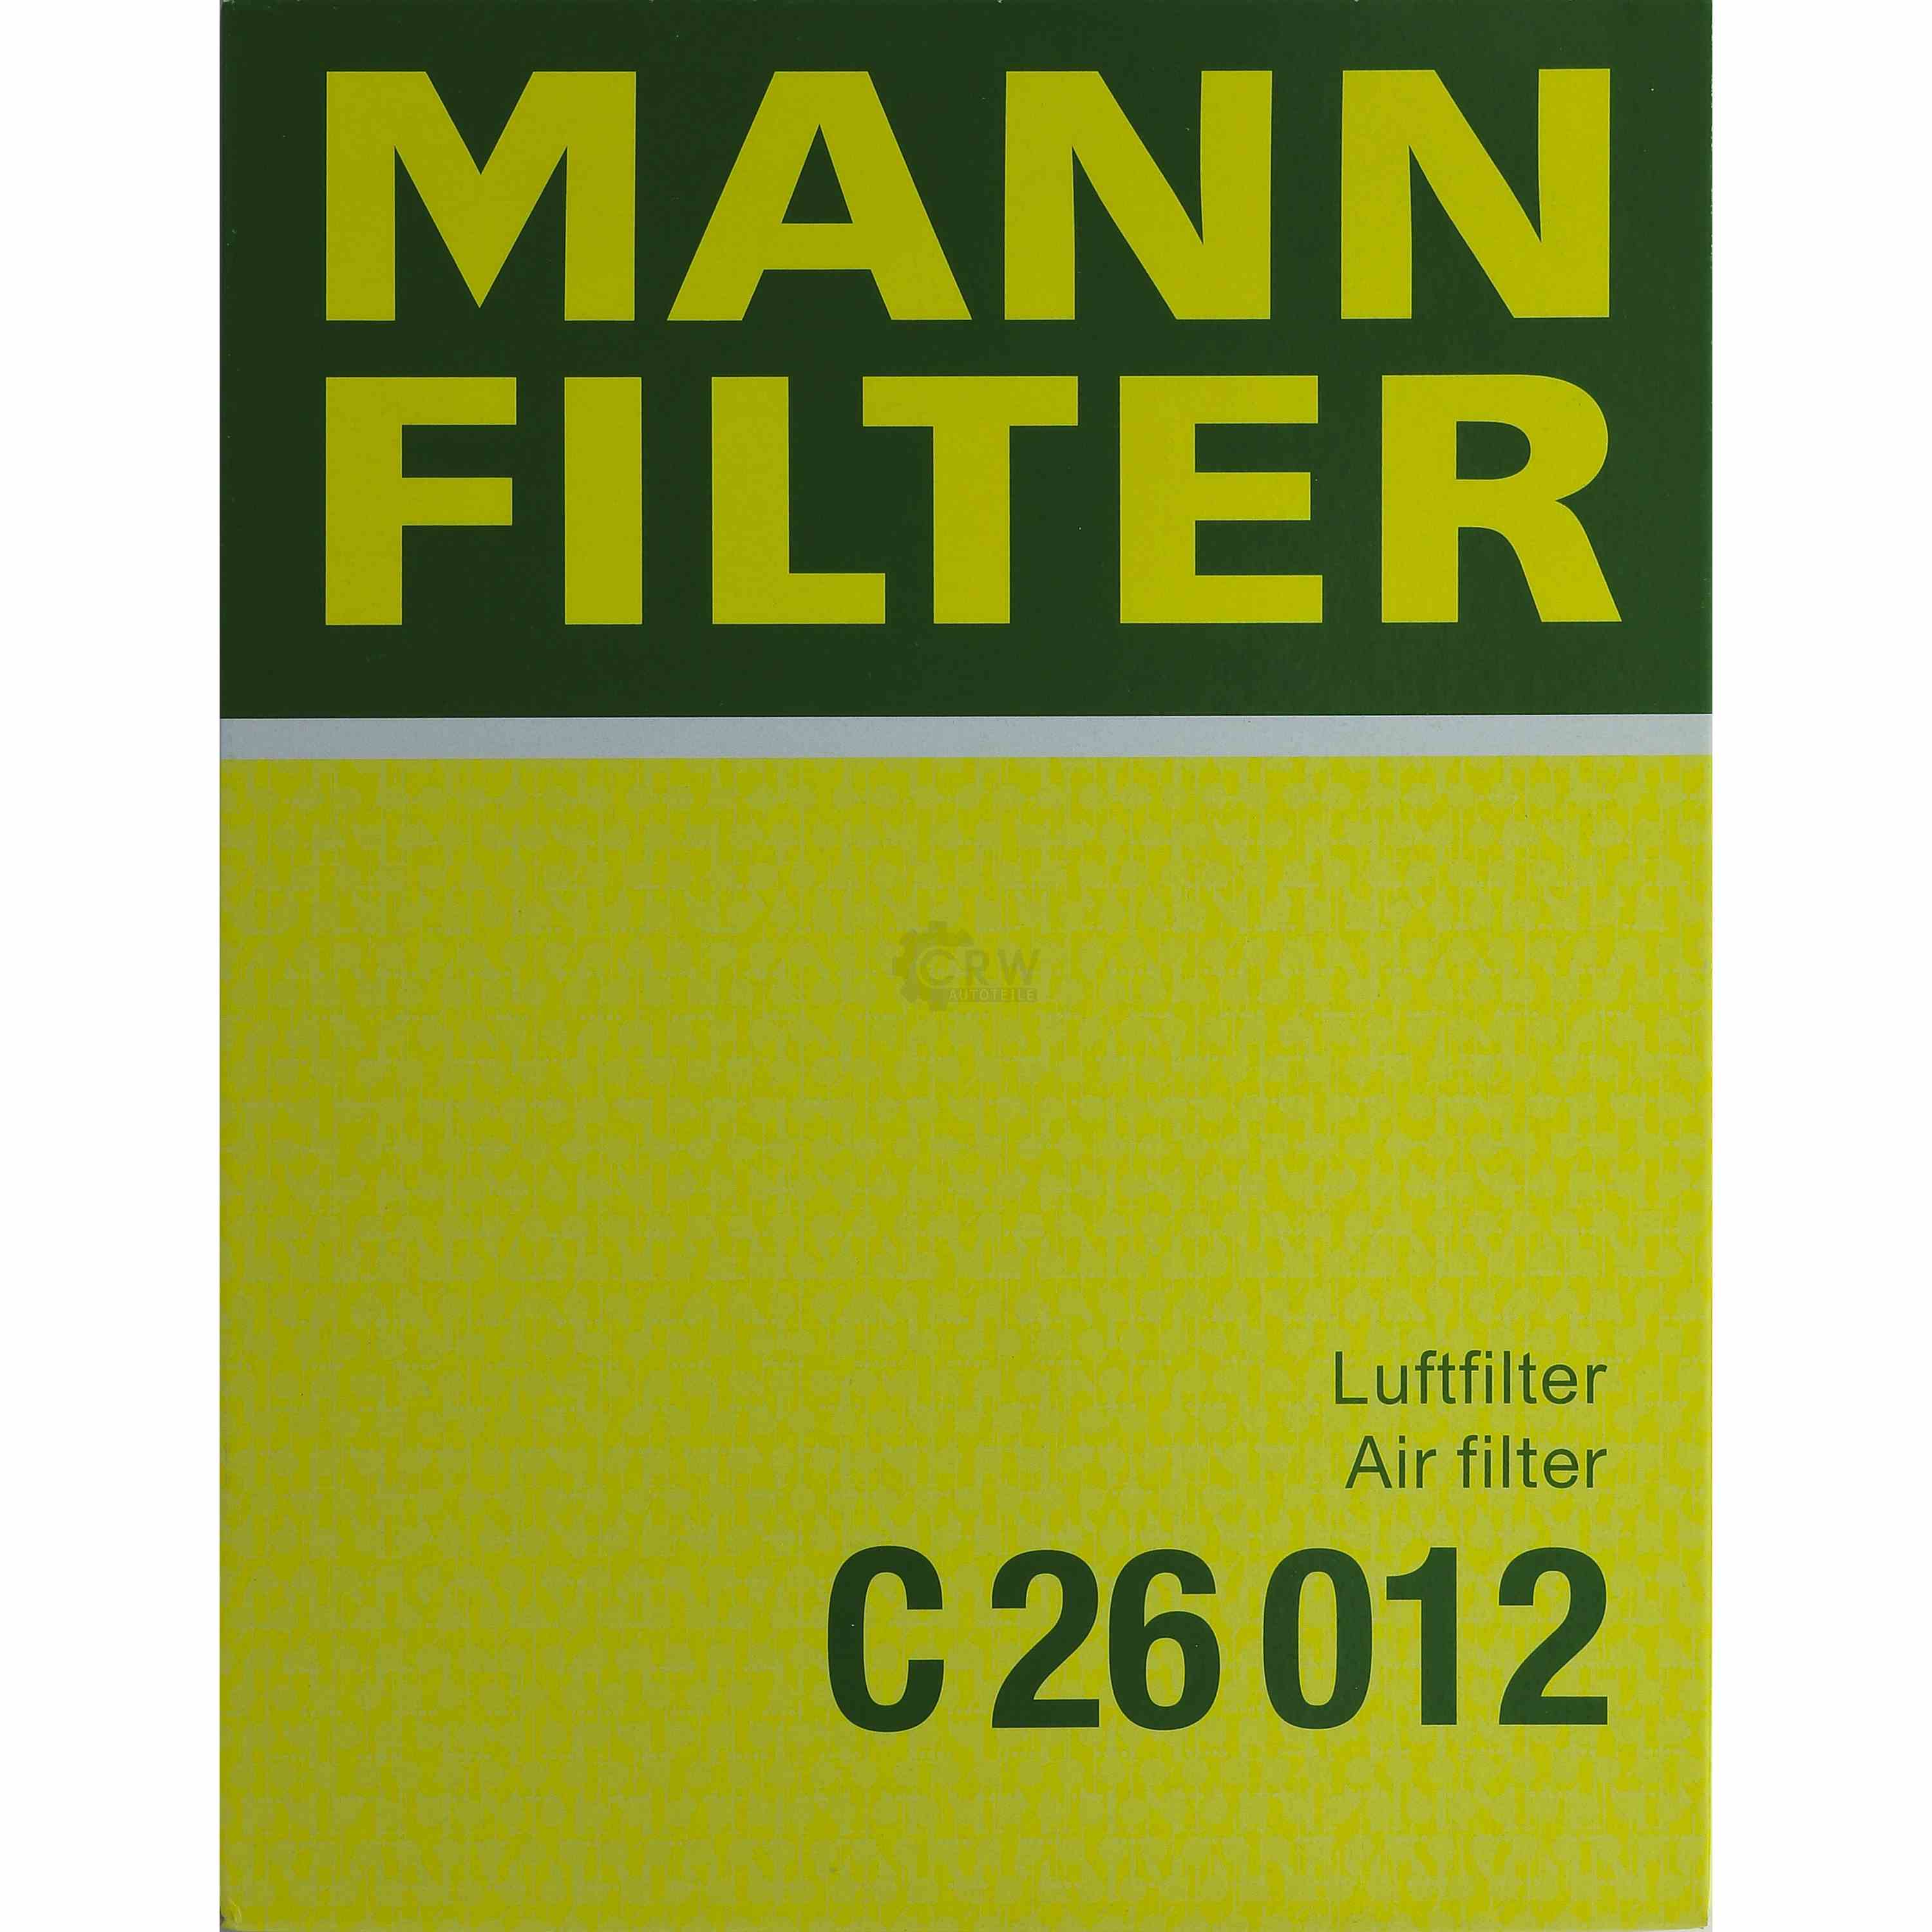 MANN-FILTER Luftfilter für KIA Carens III UN 2.0 CVVT 1.6 Magentis MG 2.7